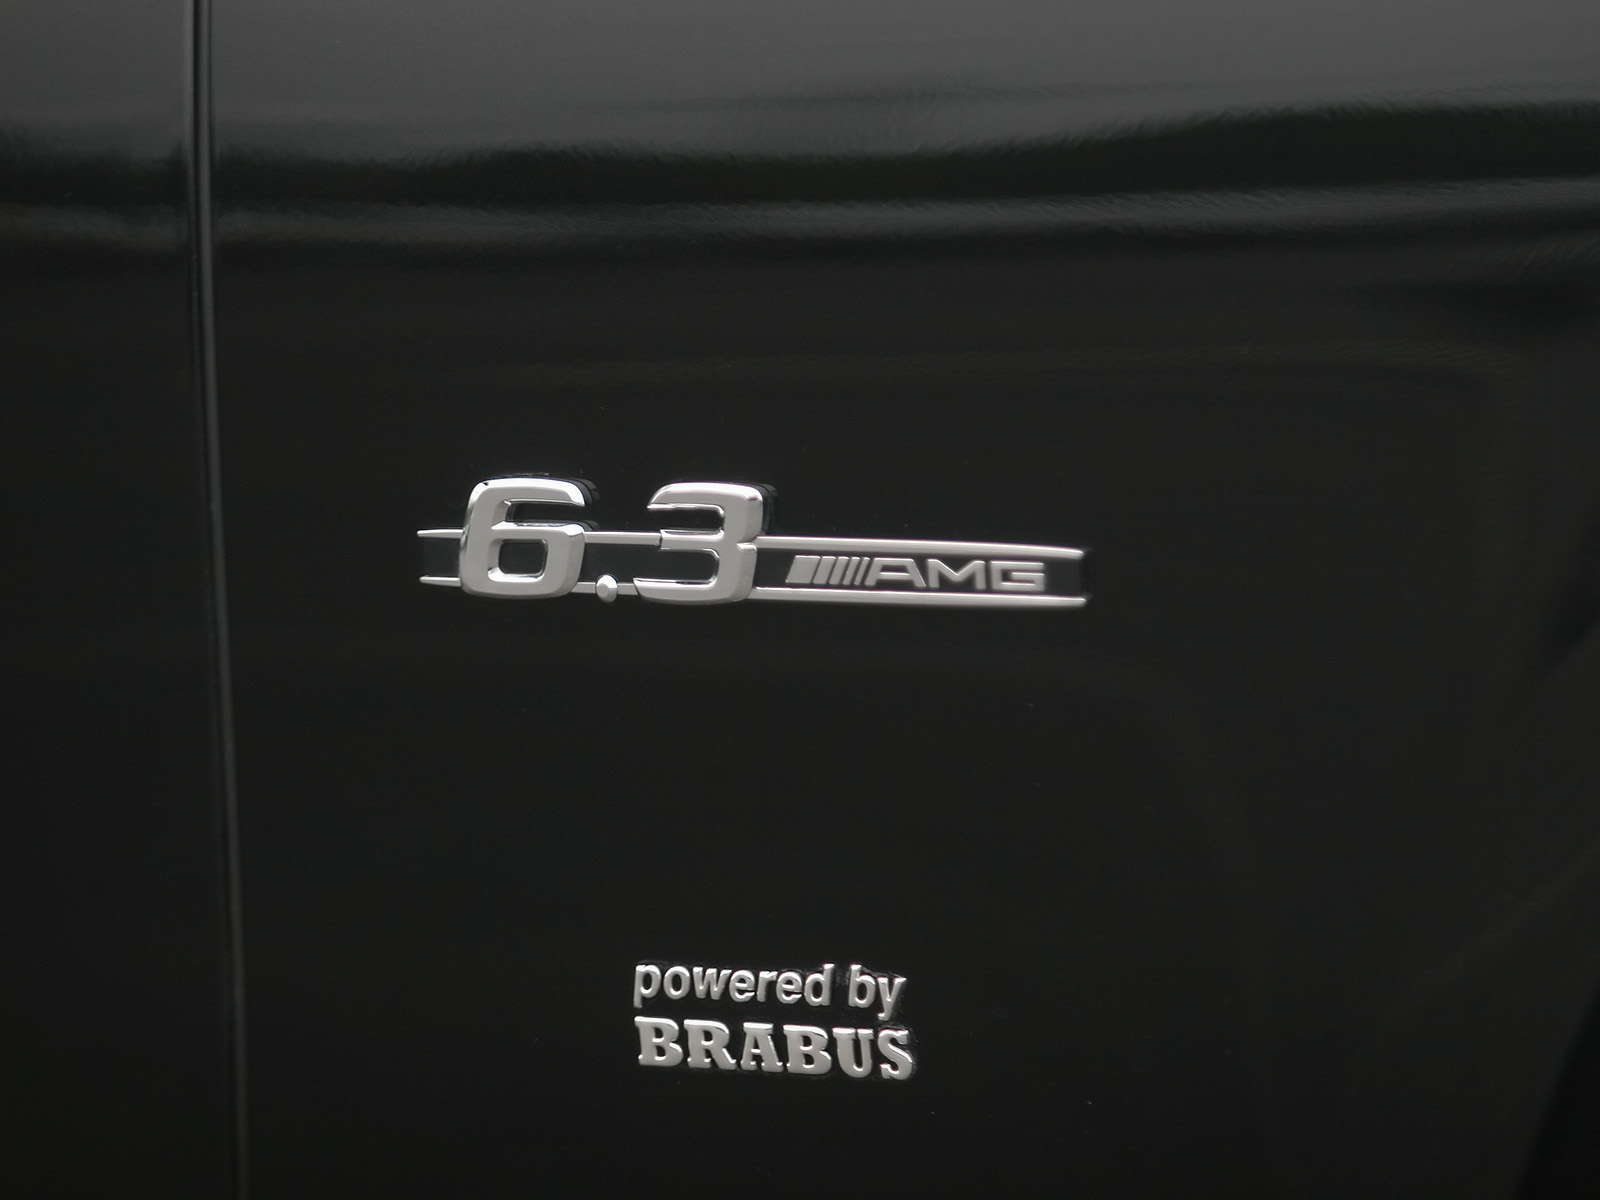 Brabus Mercedes-Benz B63 S